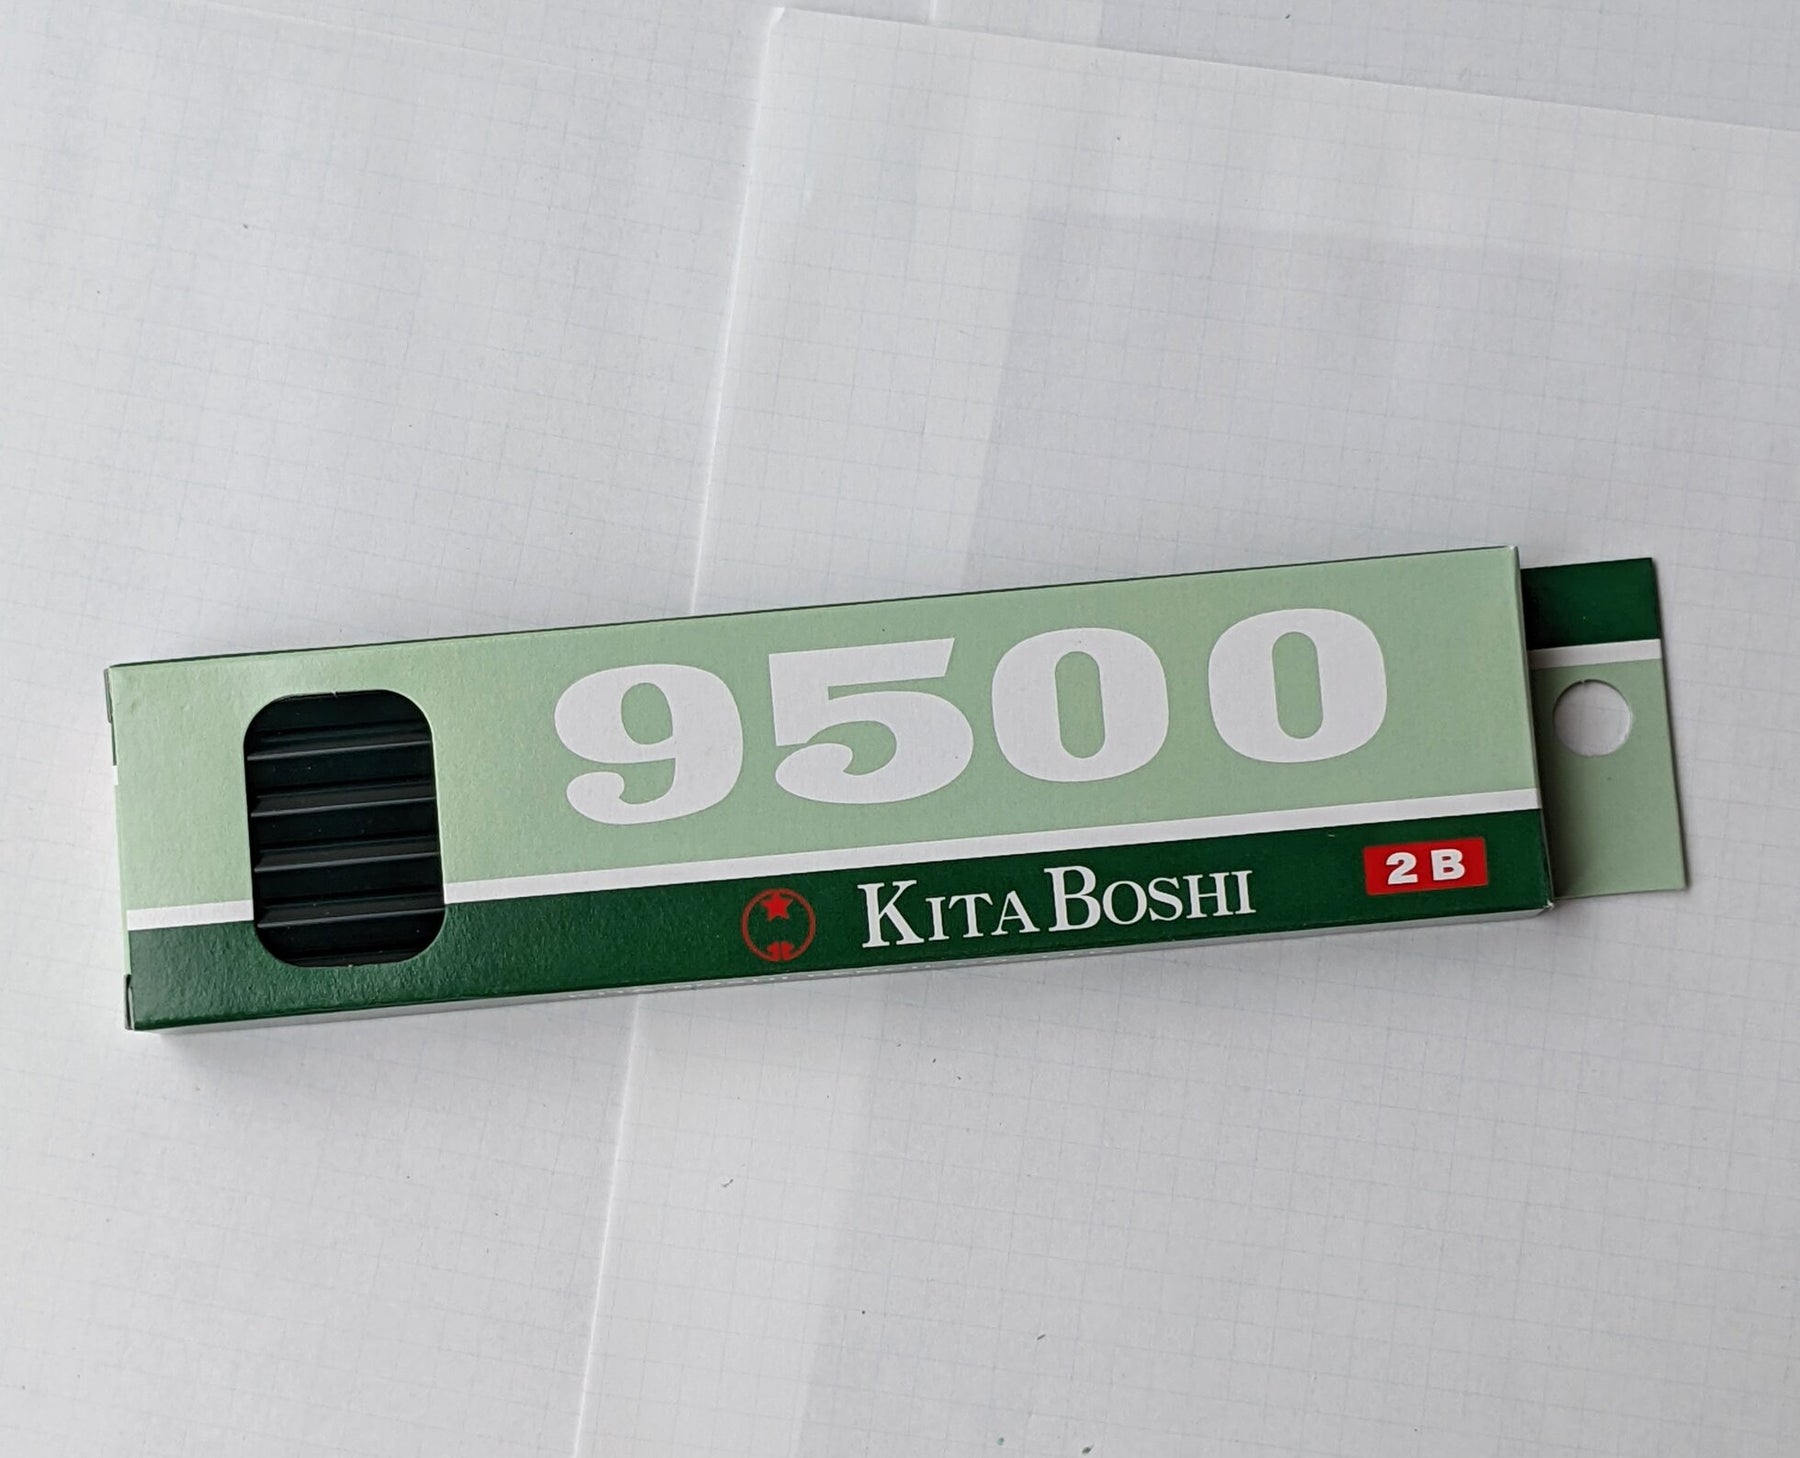 Kitaboshi 901 4B by Kita-Boshi Pencil Co.